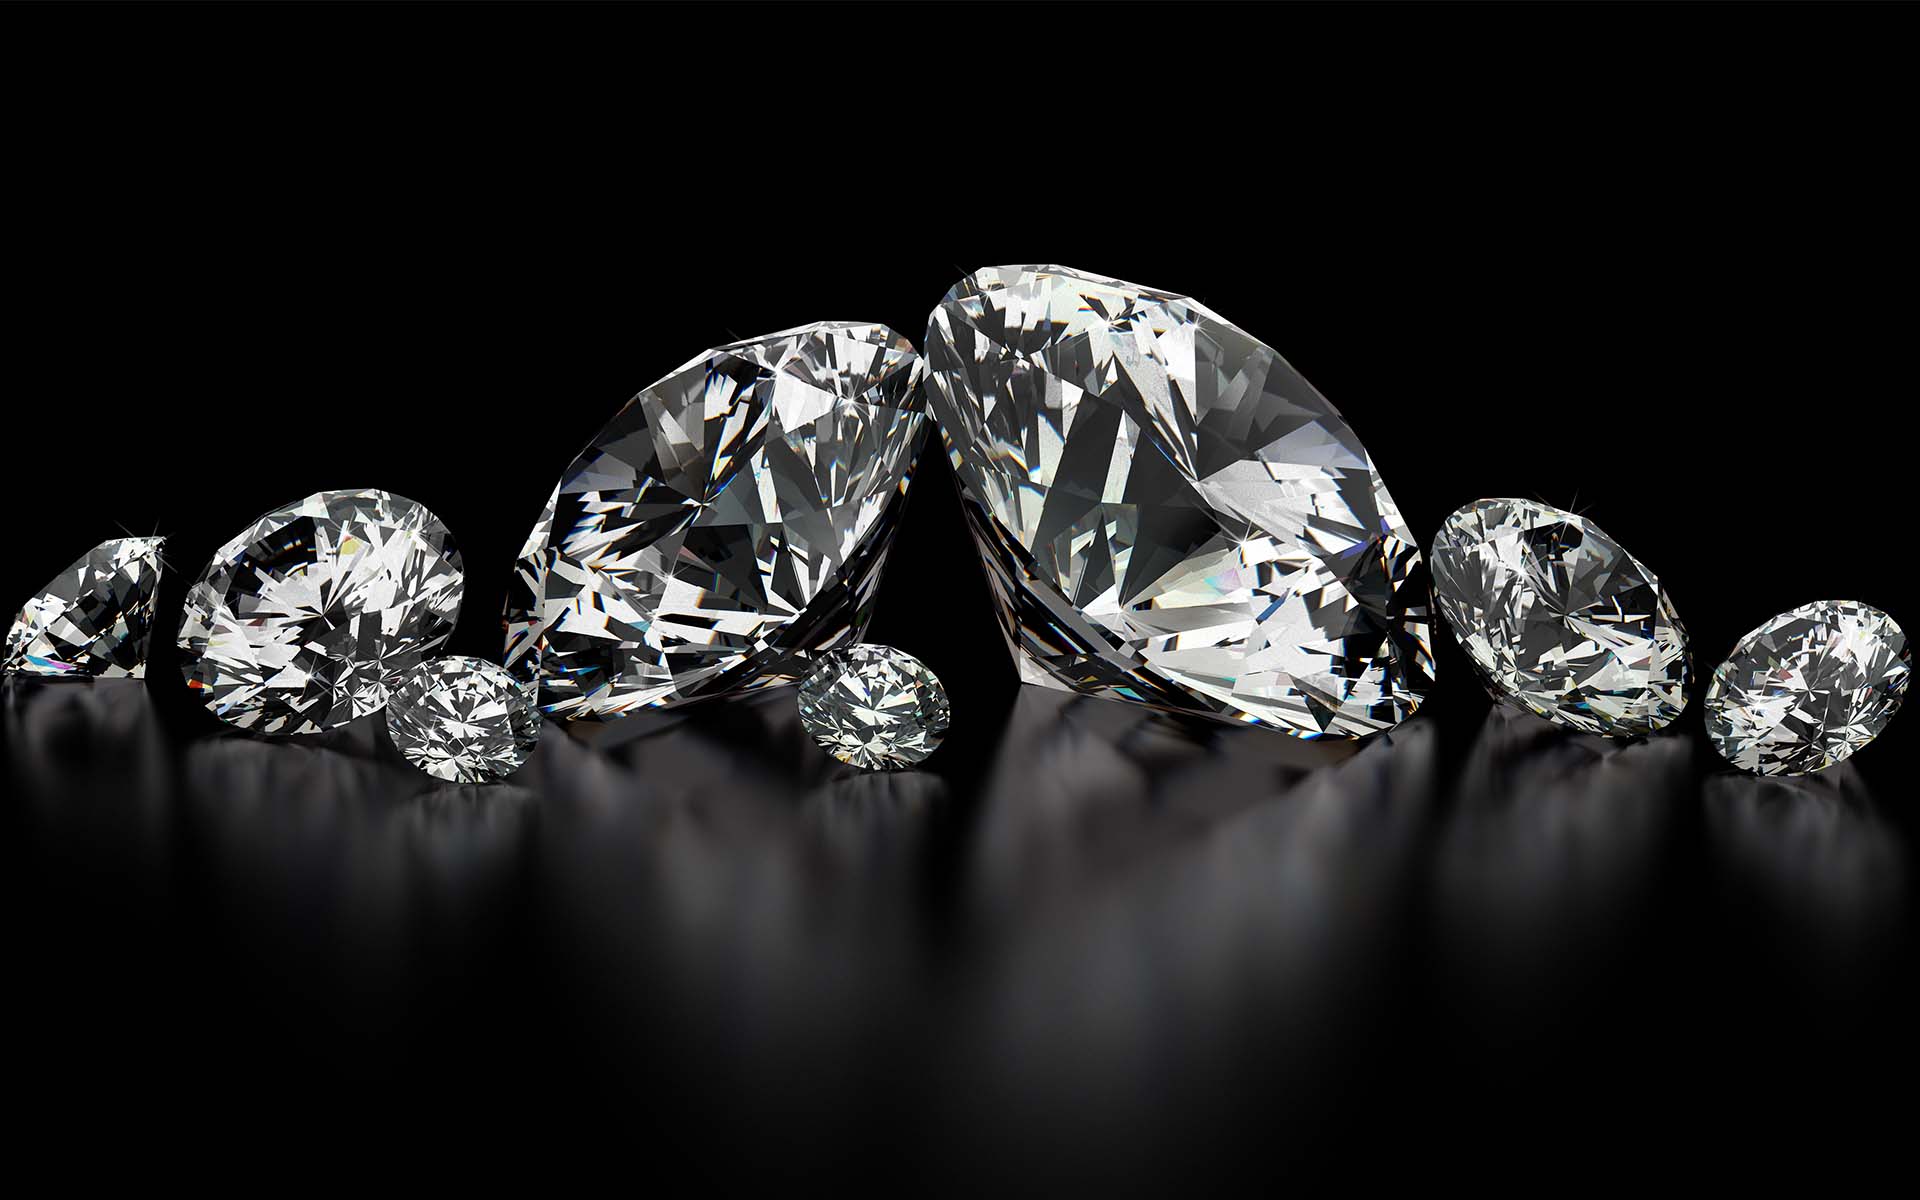 CEDEX is Transforming Diamonds into a New Asset Class